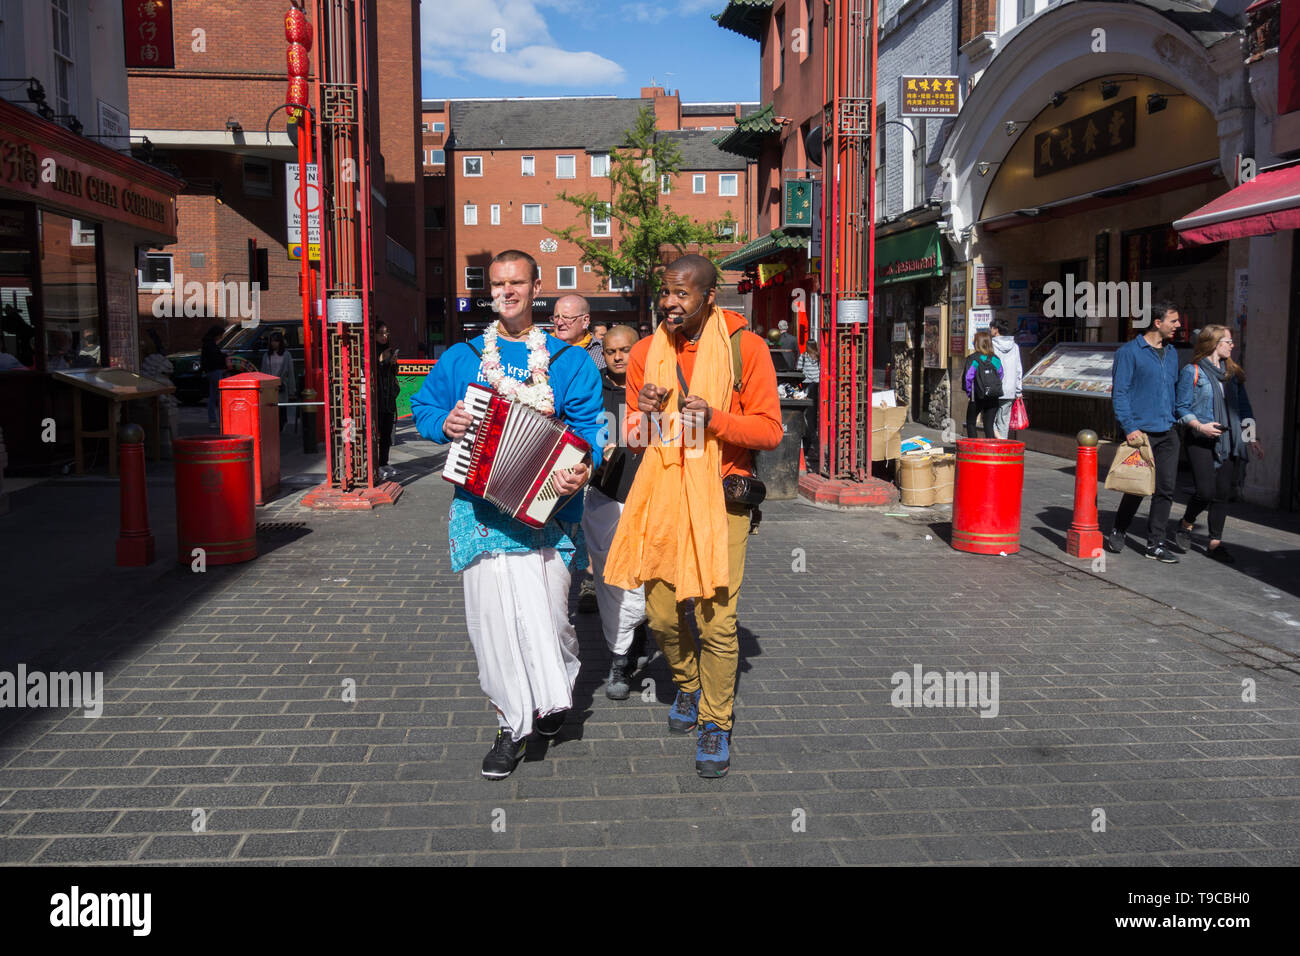 Hare Krishna followers and devotees making music and chanting in London's China Town, Soho, London, UK Stock Photo